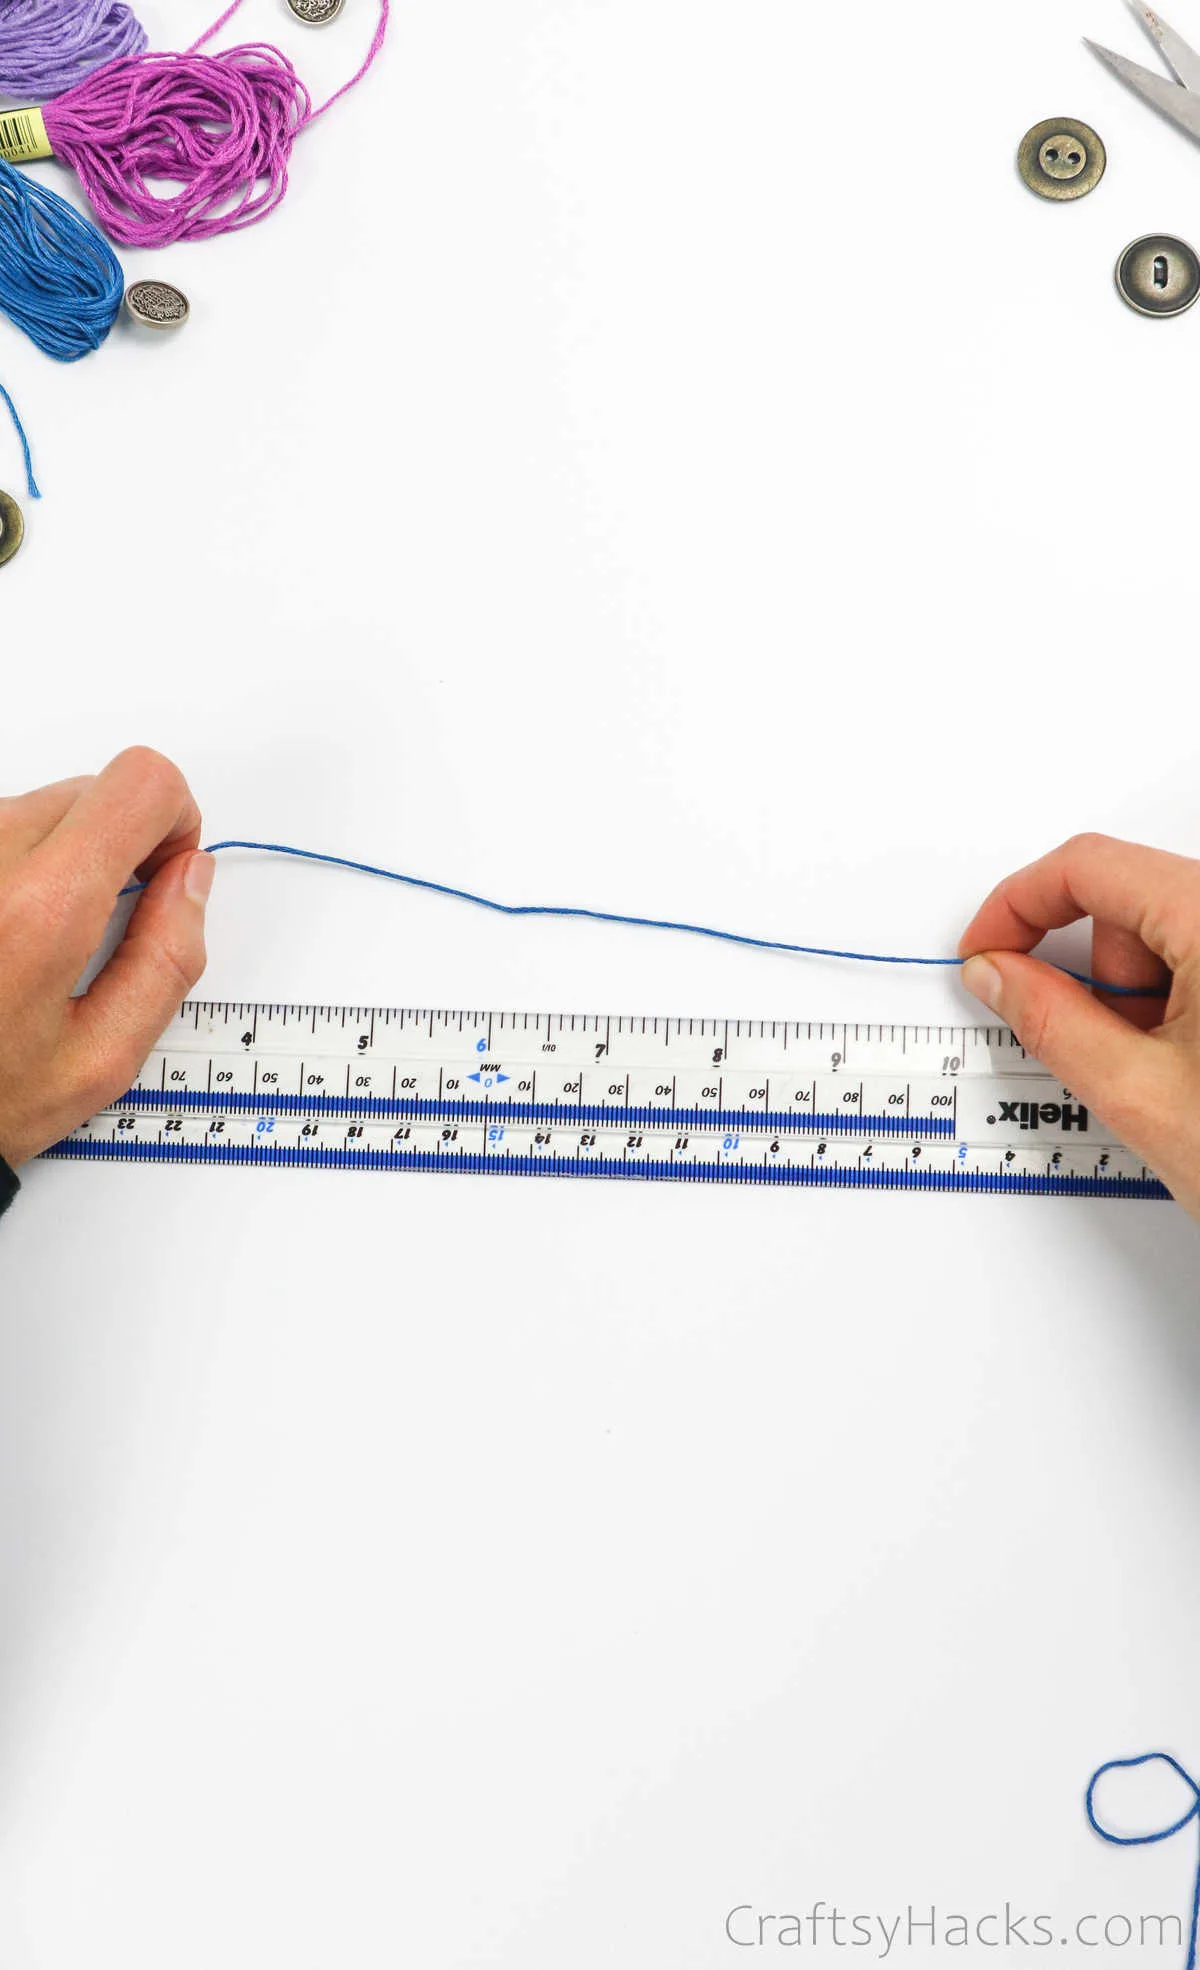 measuring thread